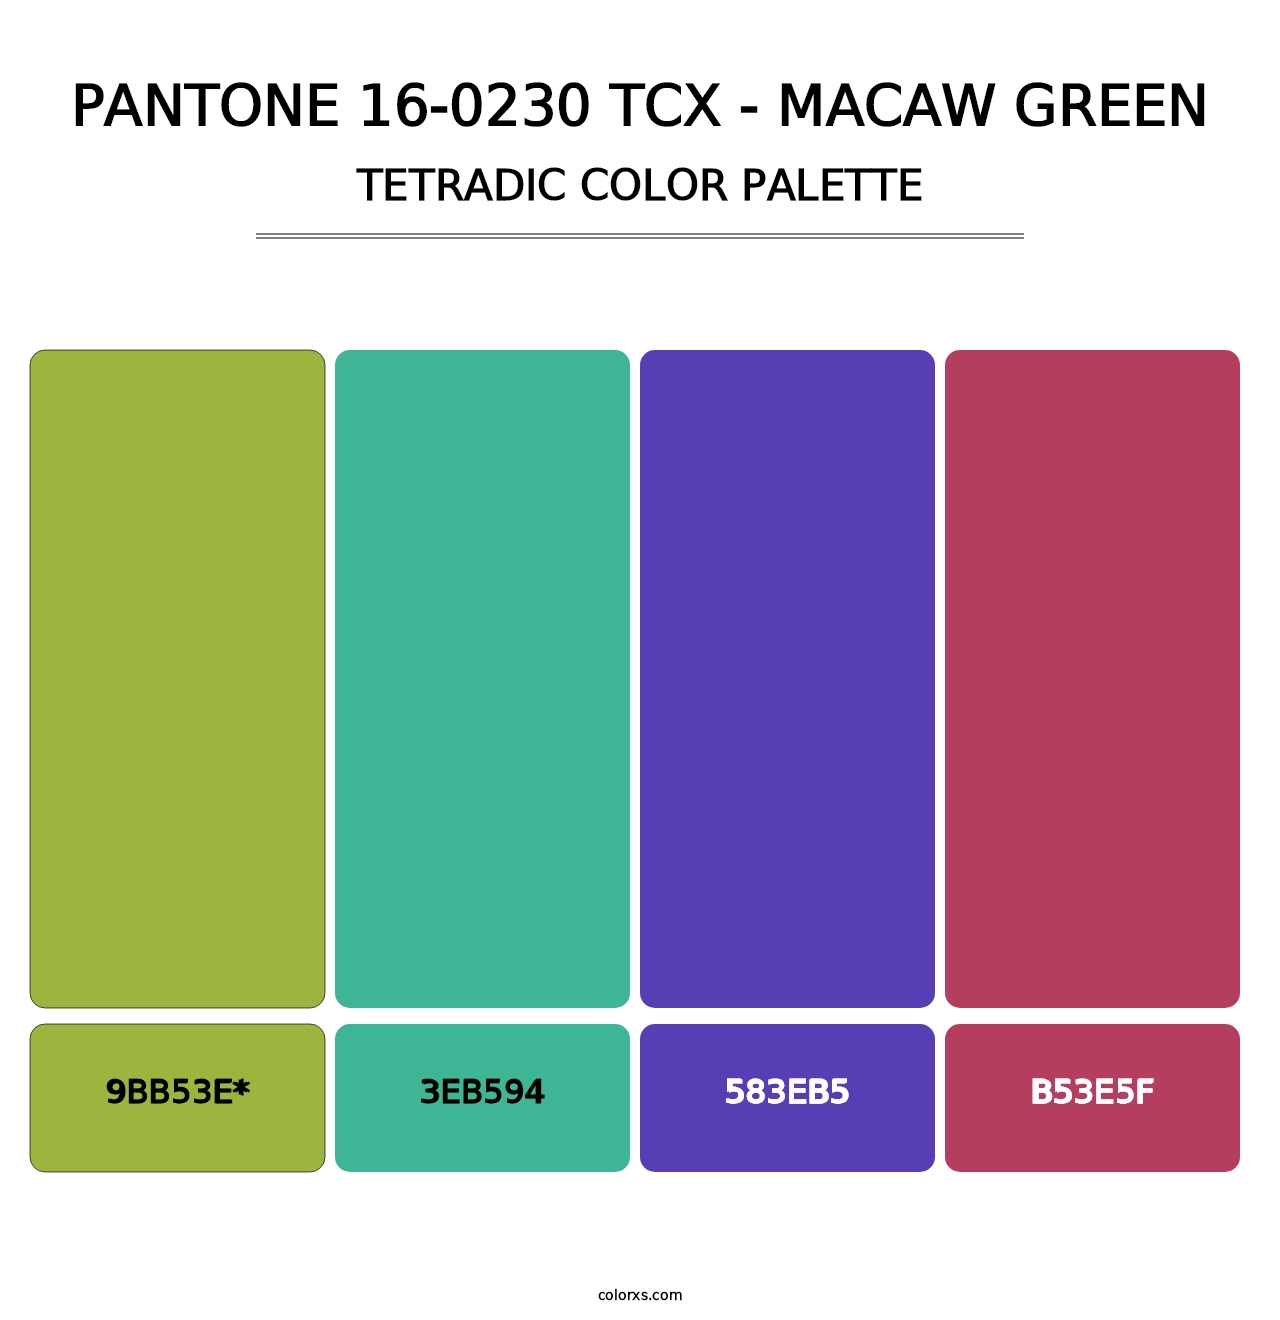 PANTONE 16-0230 TCX - Macaw Green - Tetradic Color Palette